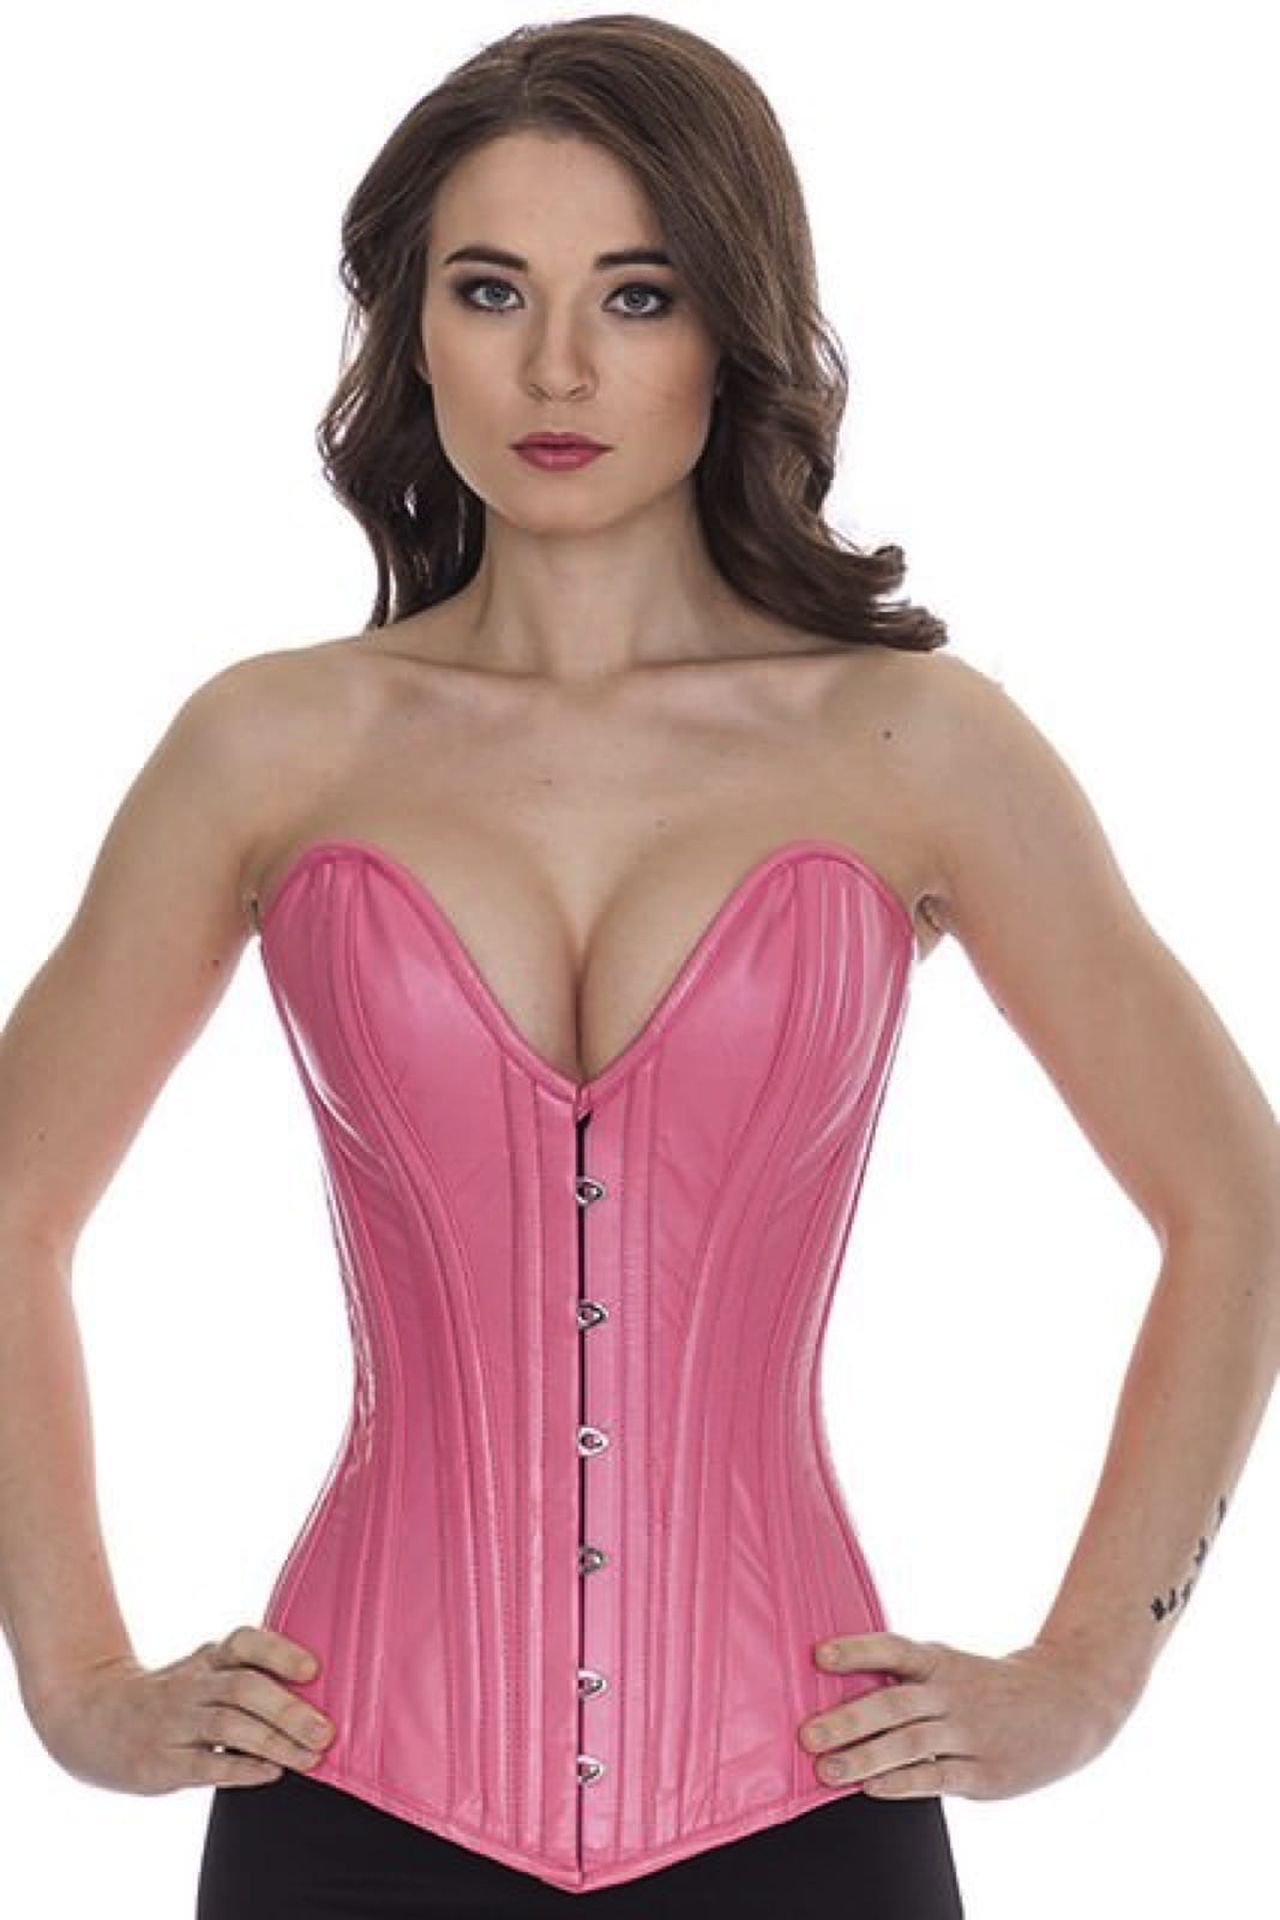 Leren corset pink volborst plunge diep decolleté Korset ll22